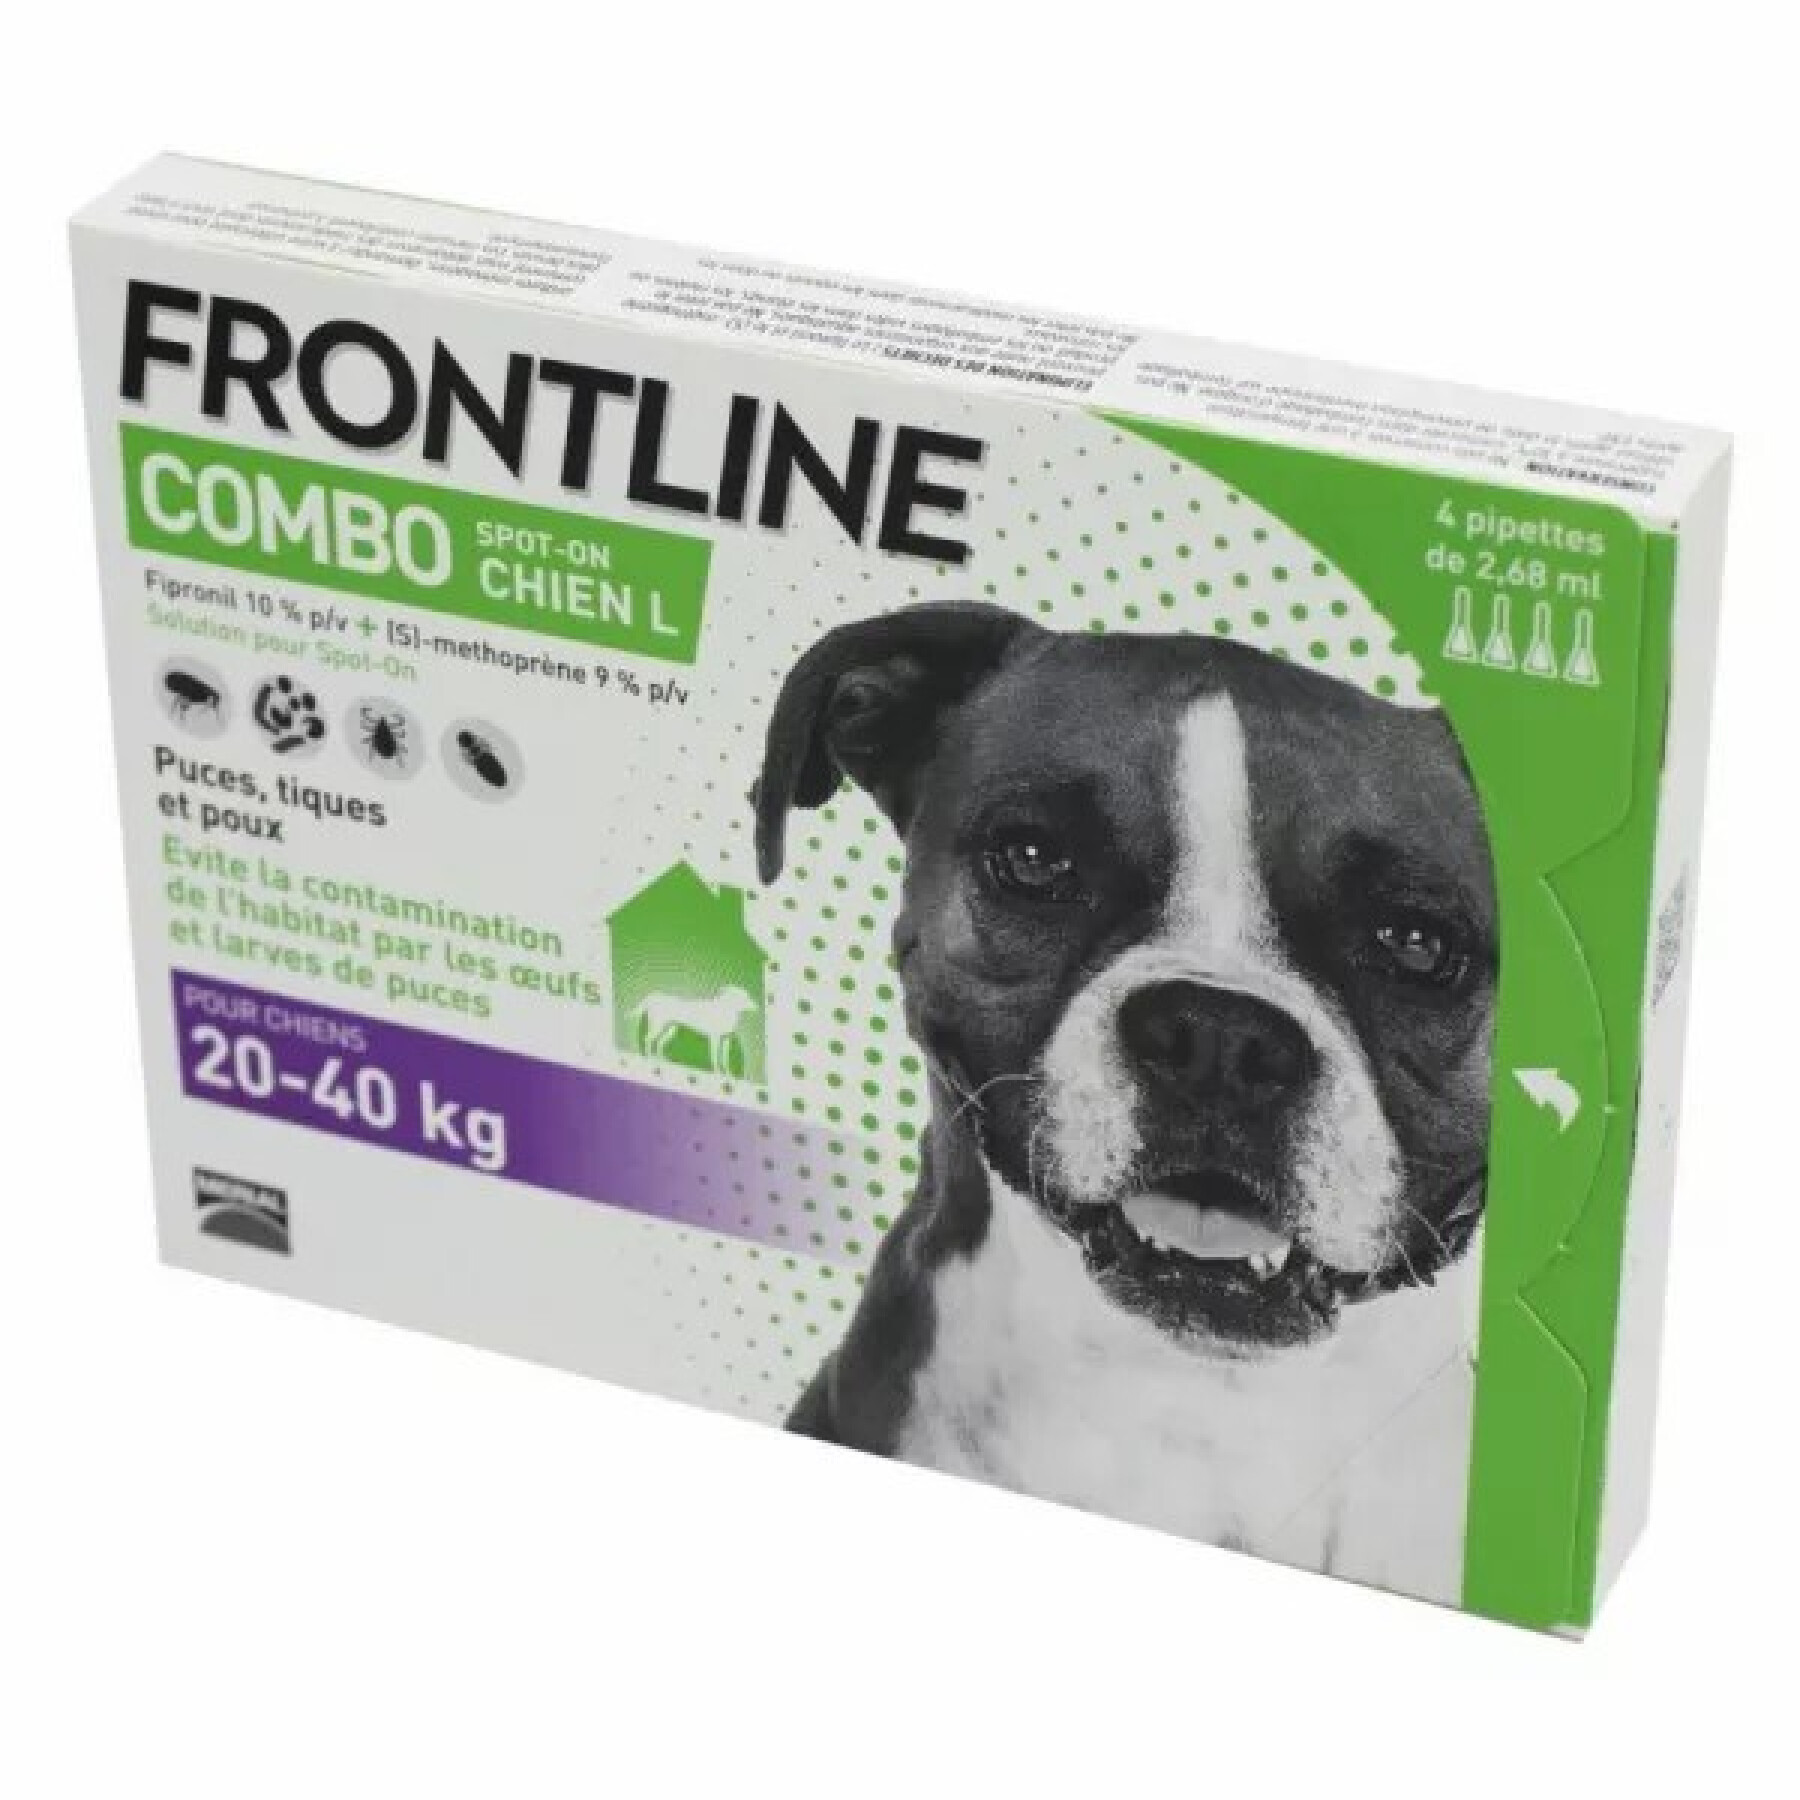 Pest control for dogs Frontline de 20/40 kg Combo Spot On (x6)